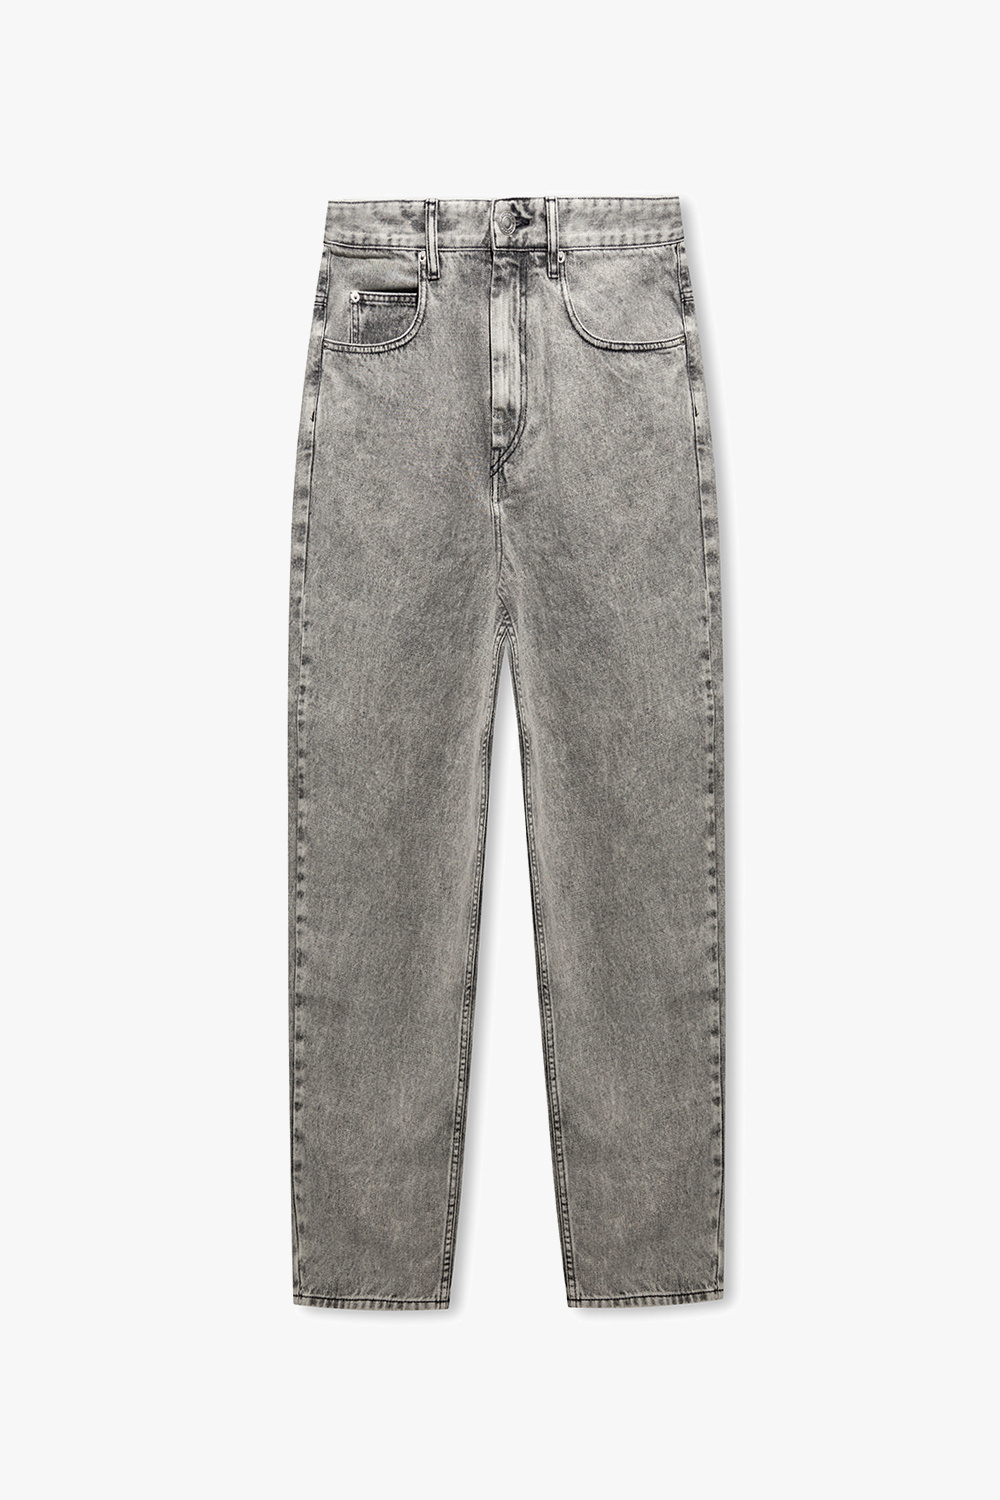 MARANT ‘Larson’ tapered jeans